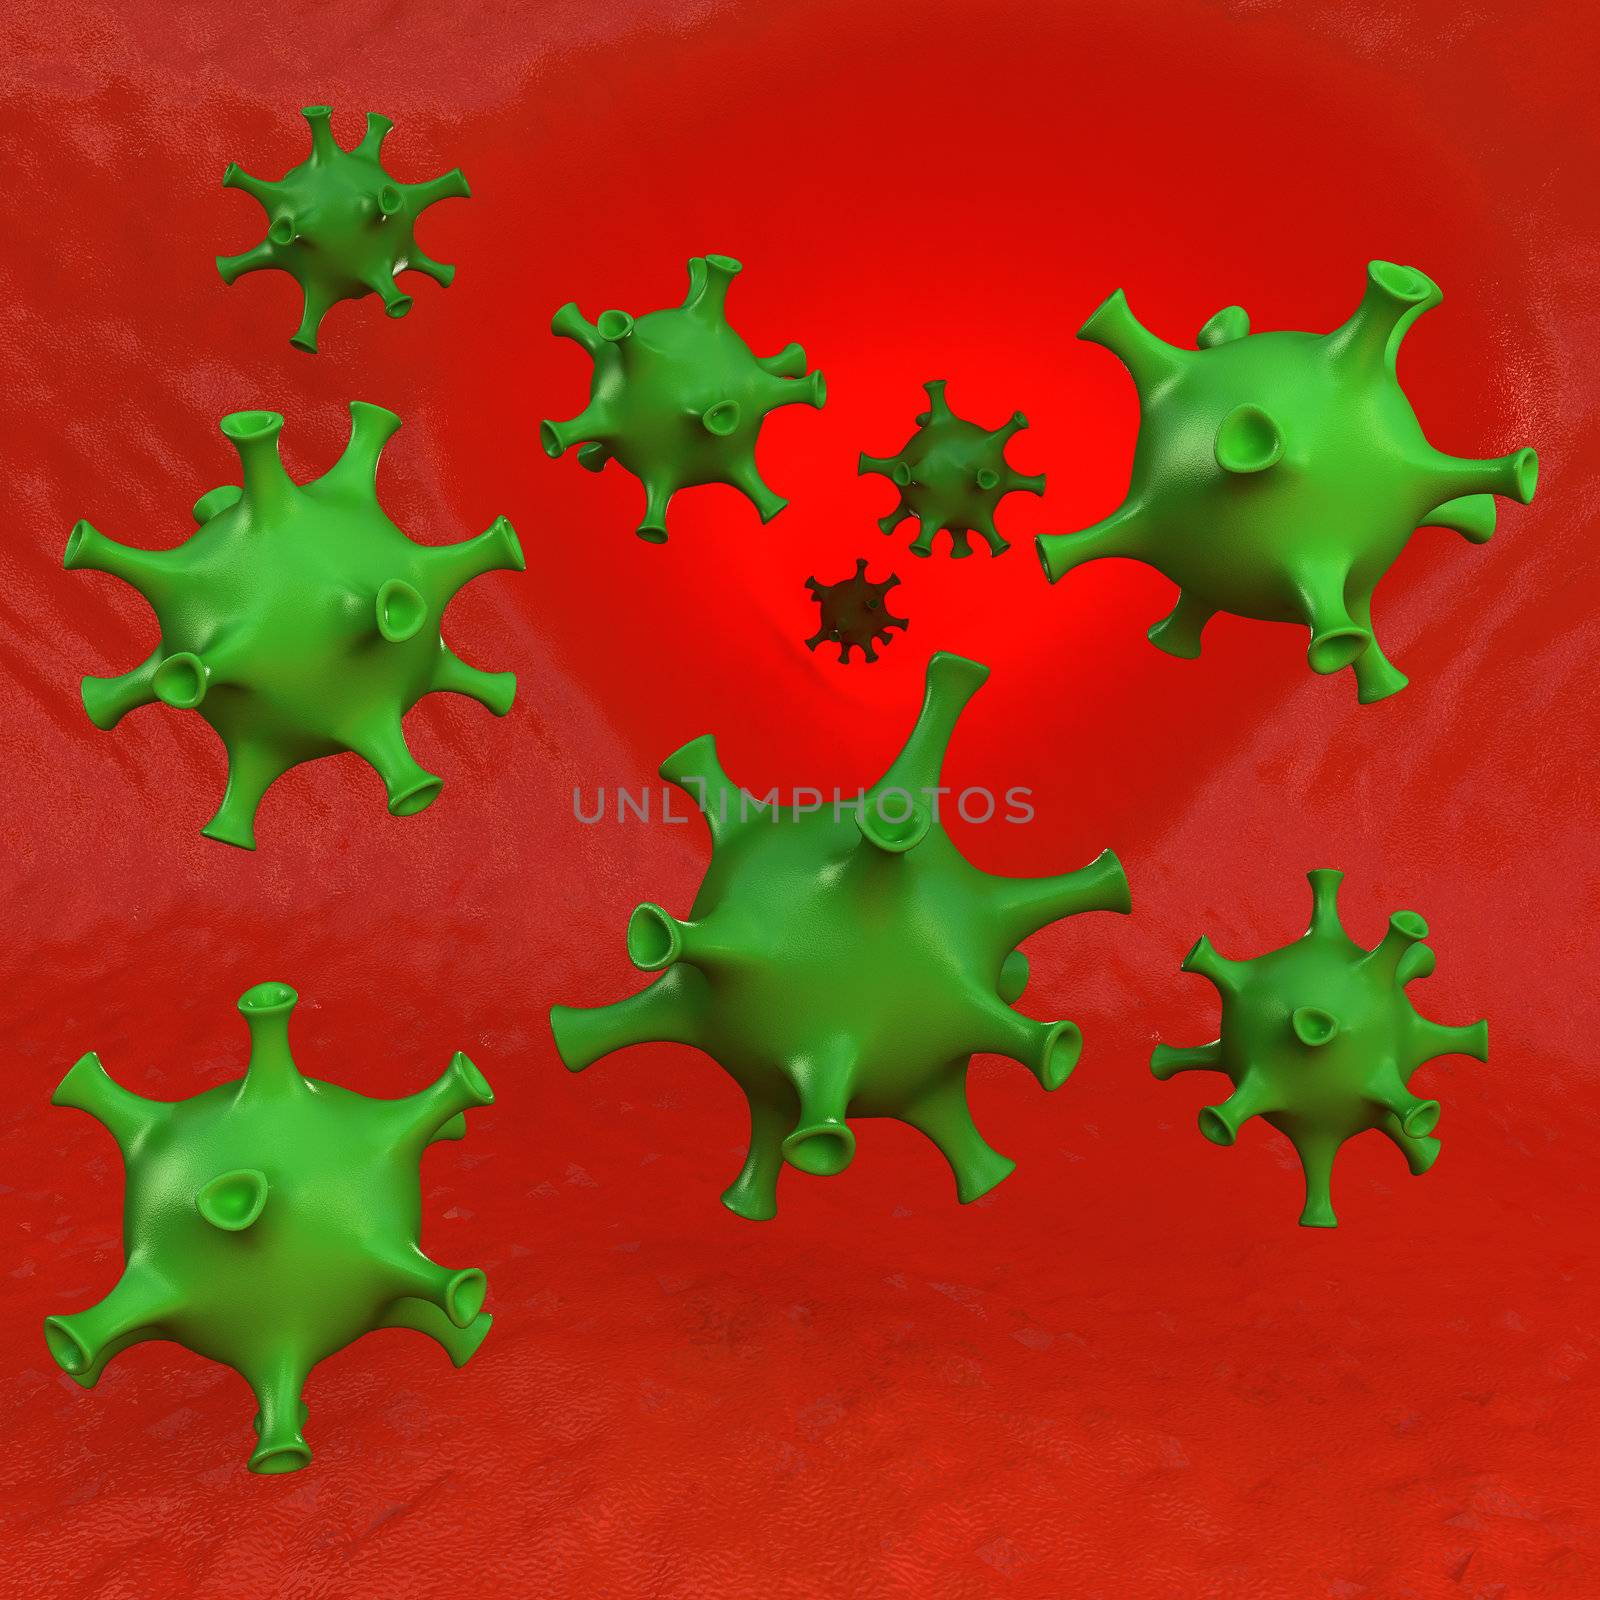 Microscopic virus organism inside a human